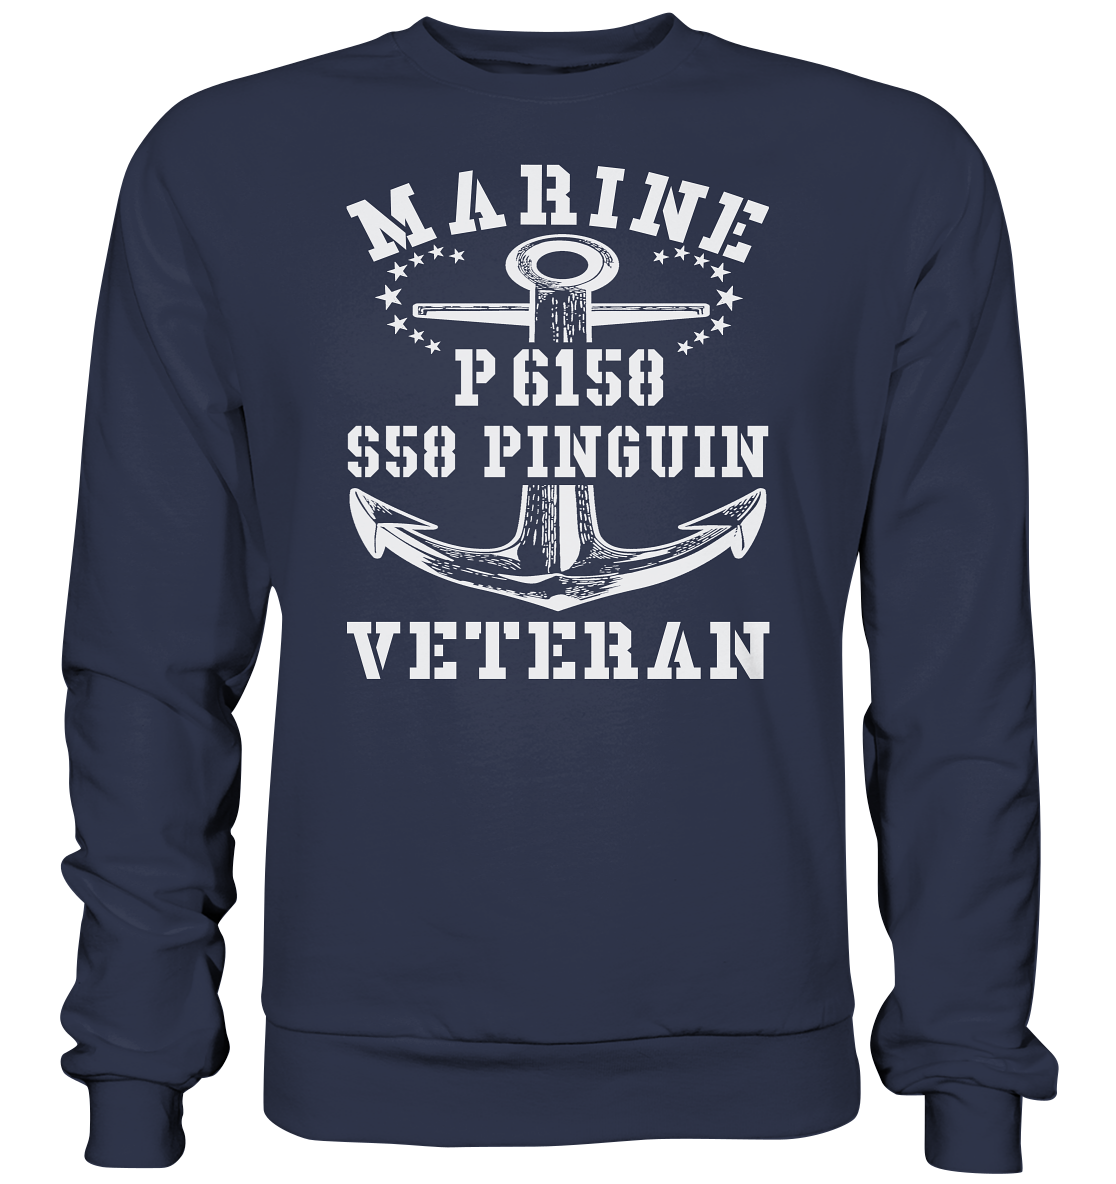 P6158 S58 PINGUIN Marine Veteran - Premium Sweatshirt